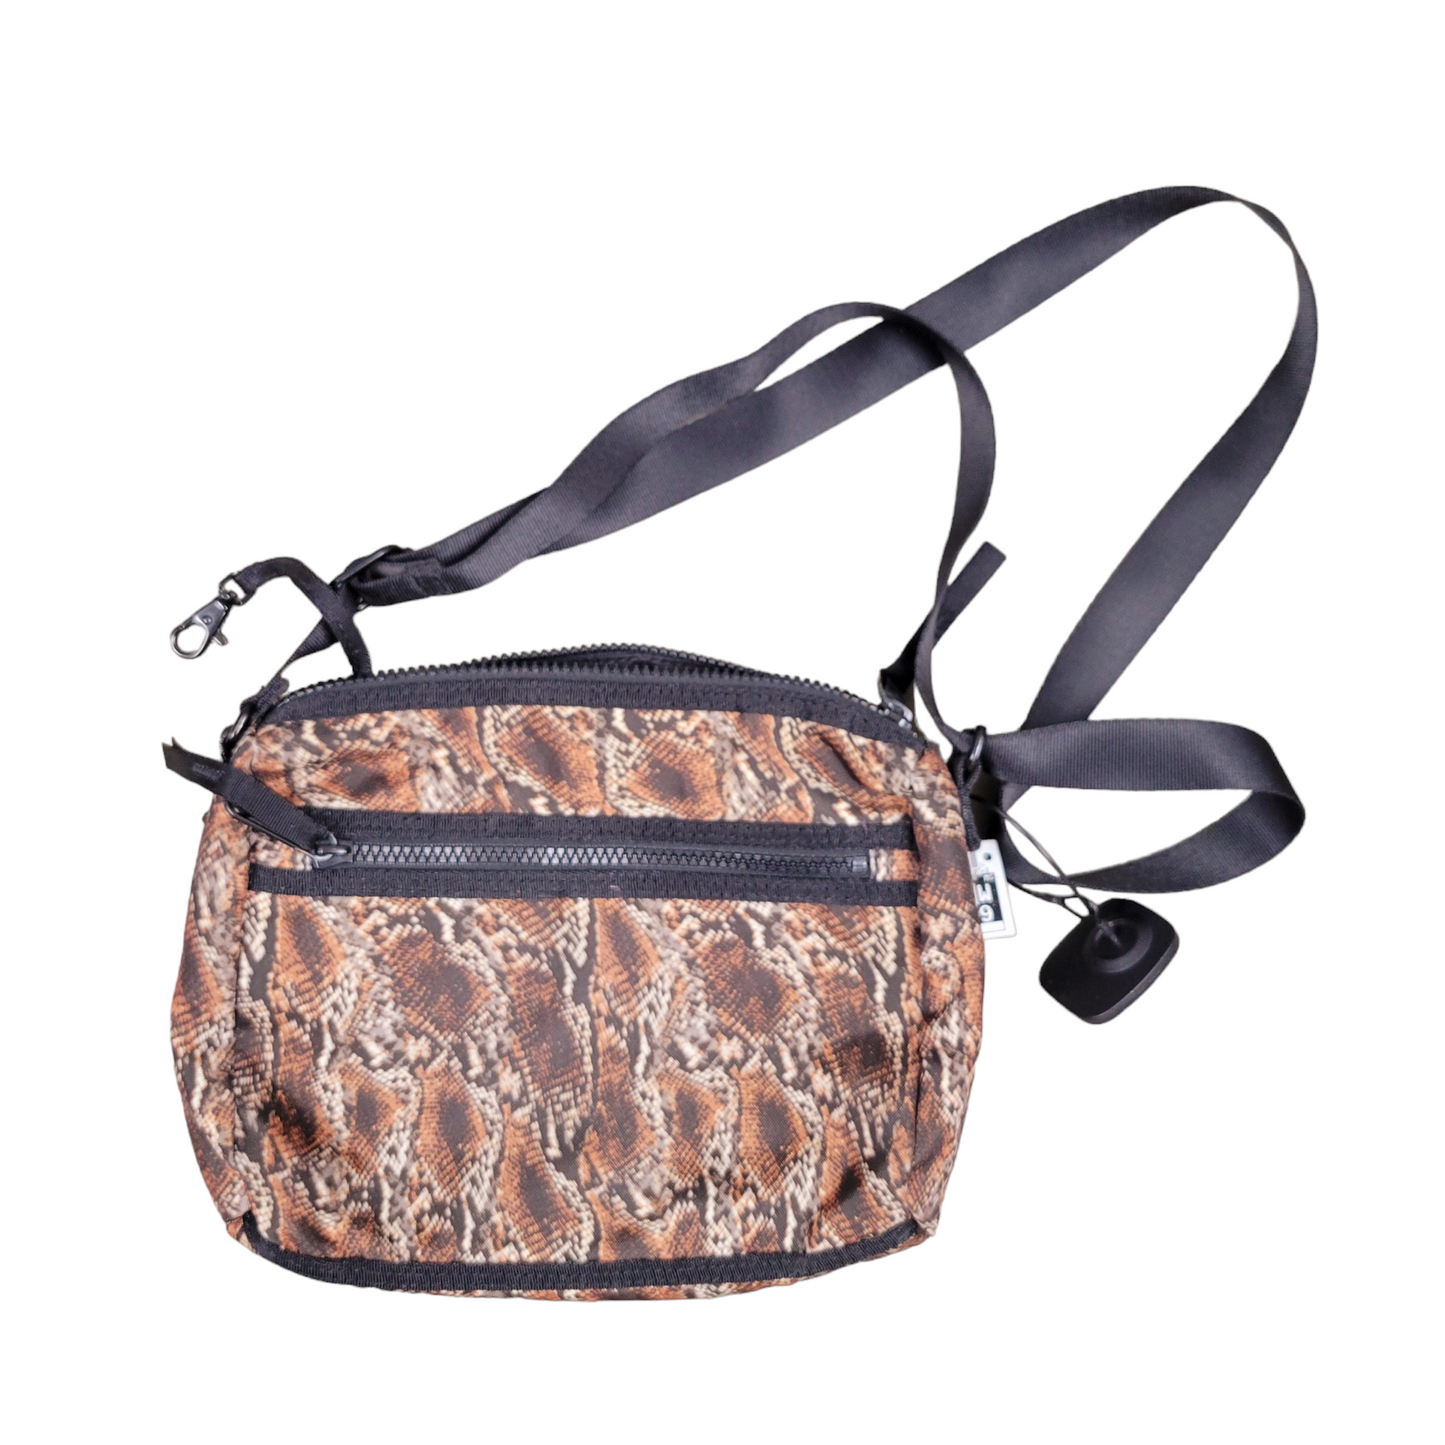 Handbag By Kipling  Size: Small